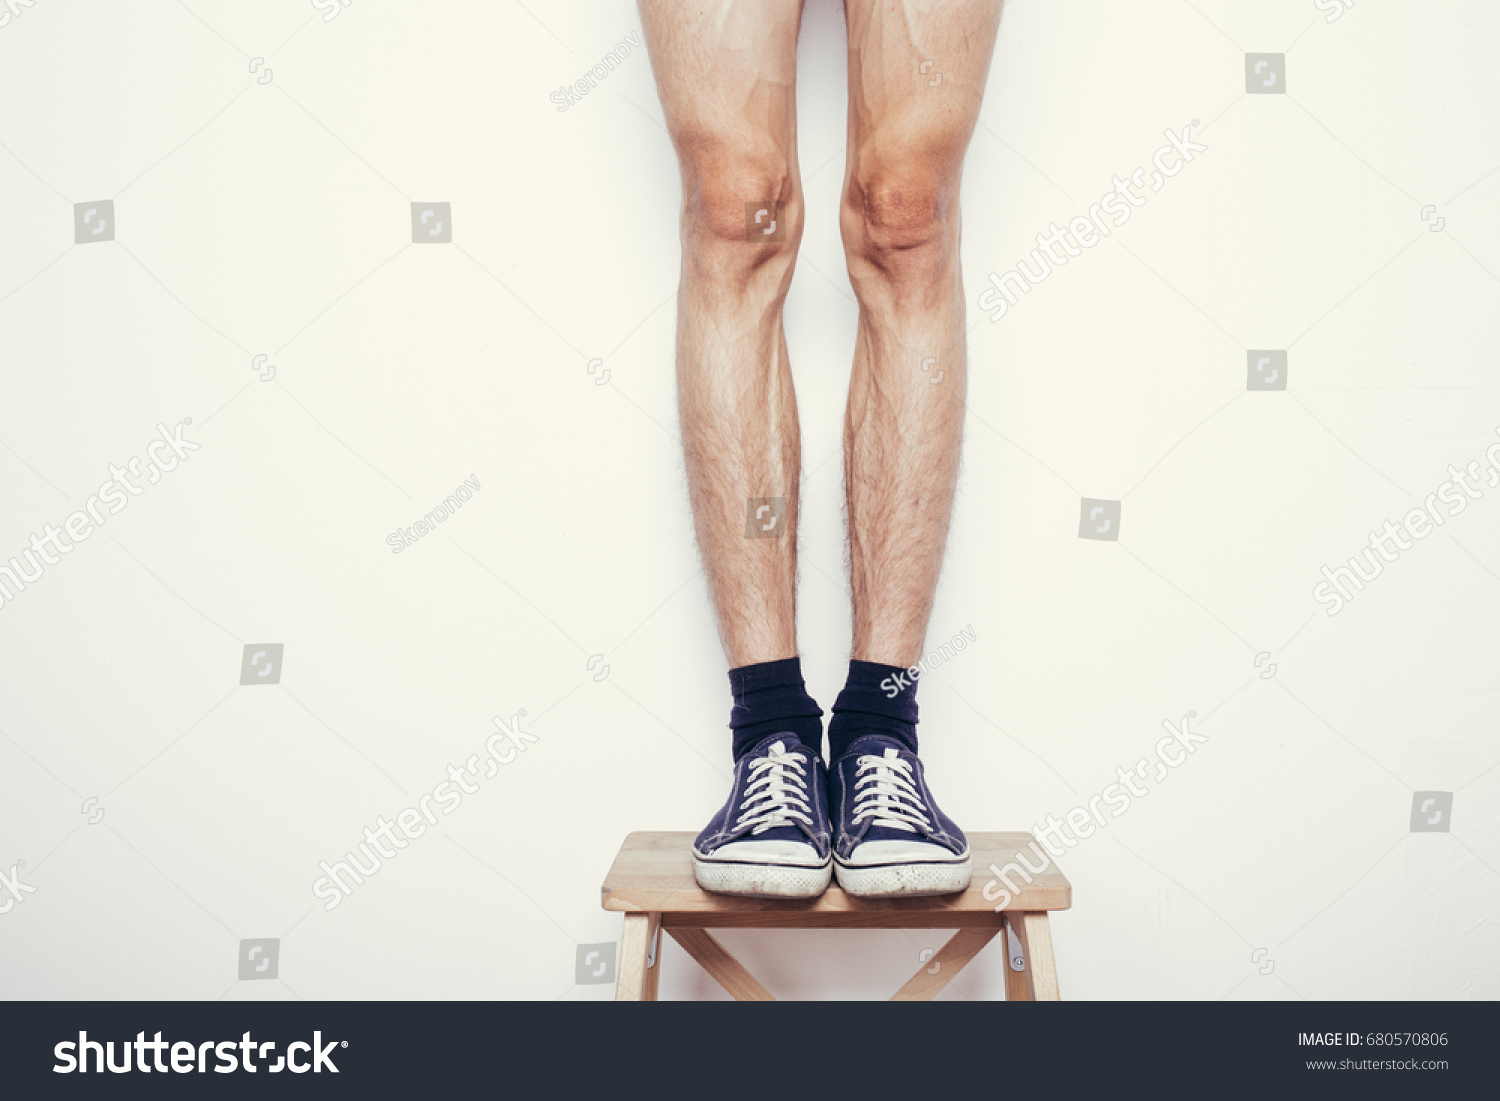 Best of Long skinny legs pics